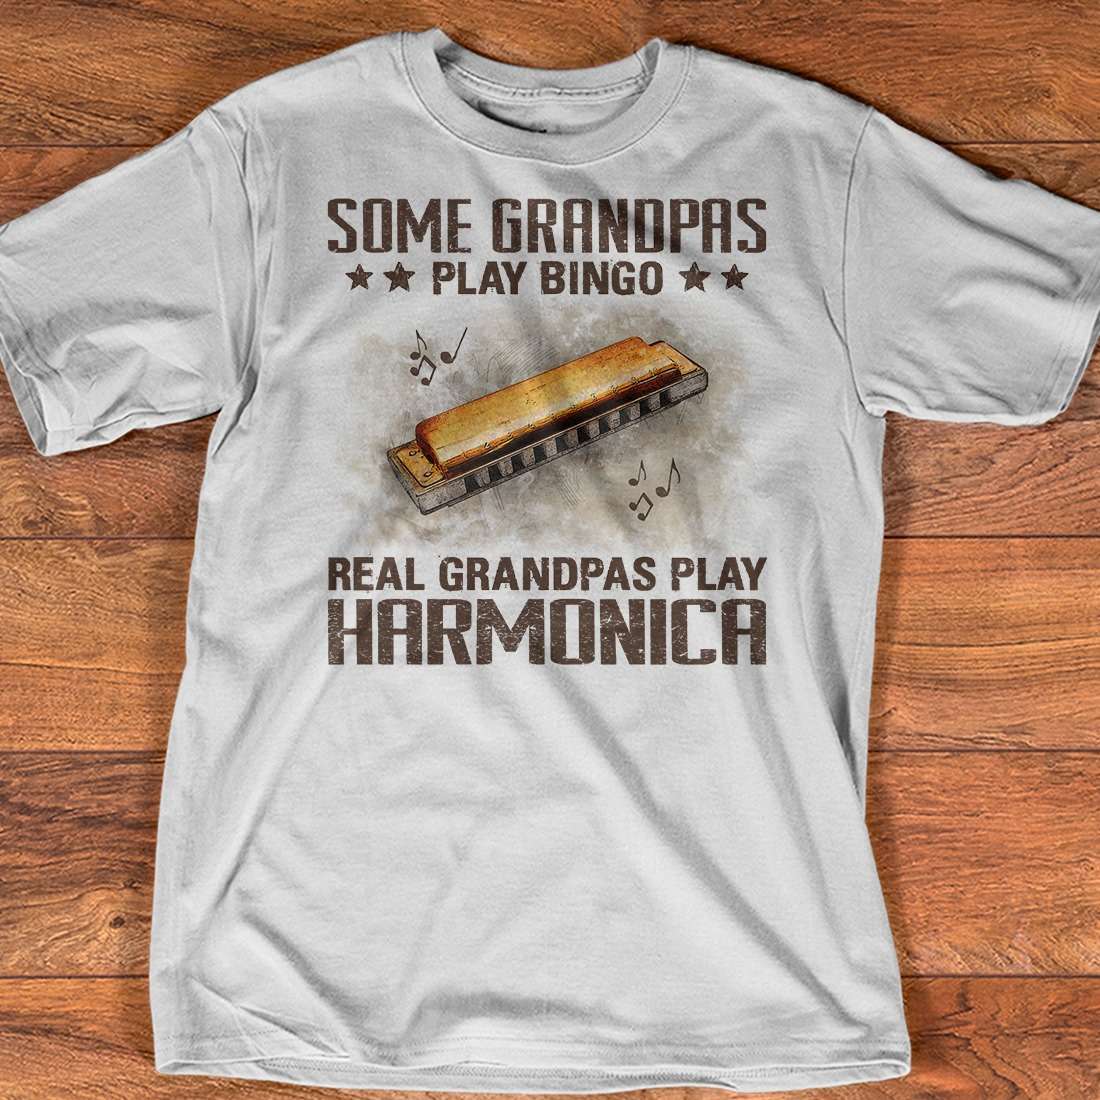 Some grandpas play bingo, real grandpas play Harmonica - Harmonica the instrument